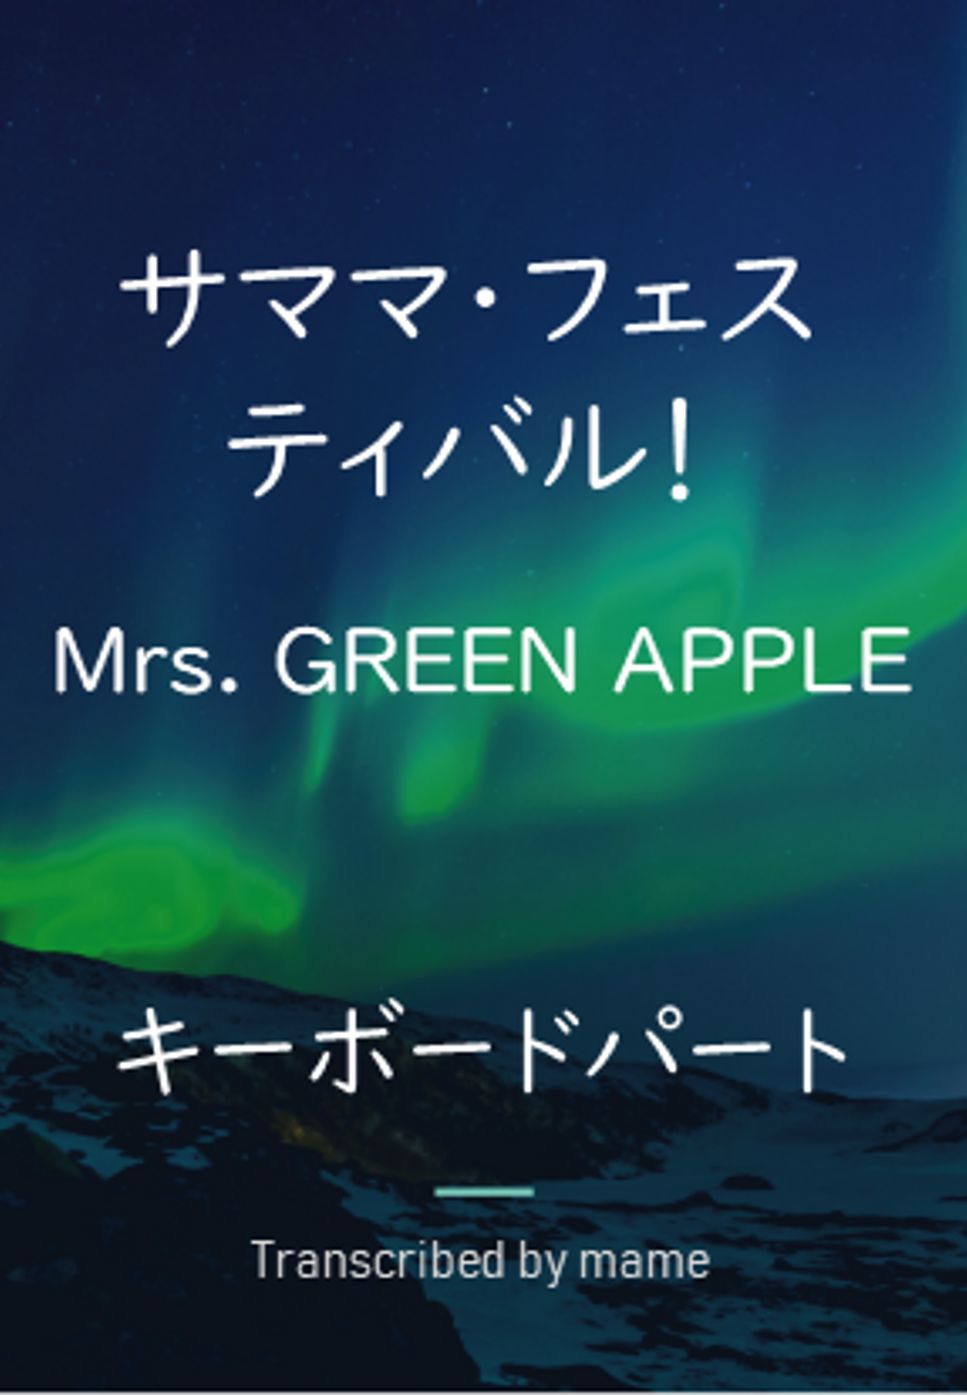 Mrs. GREEN APPLE - サママ・フェスティバル！ (キーボードパート) by mame